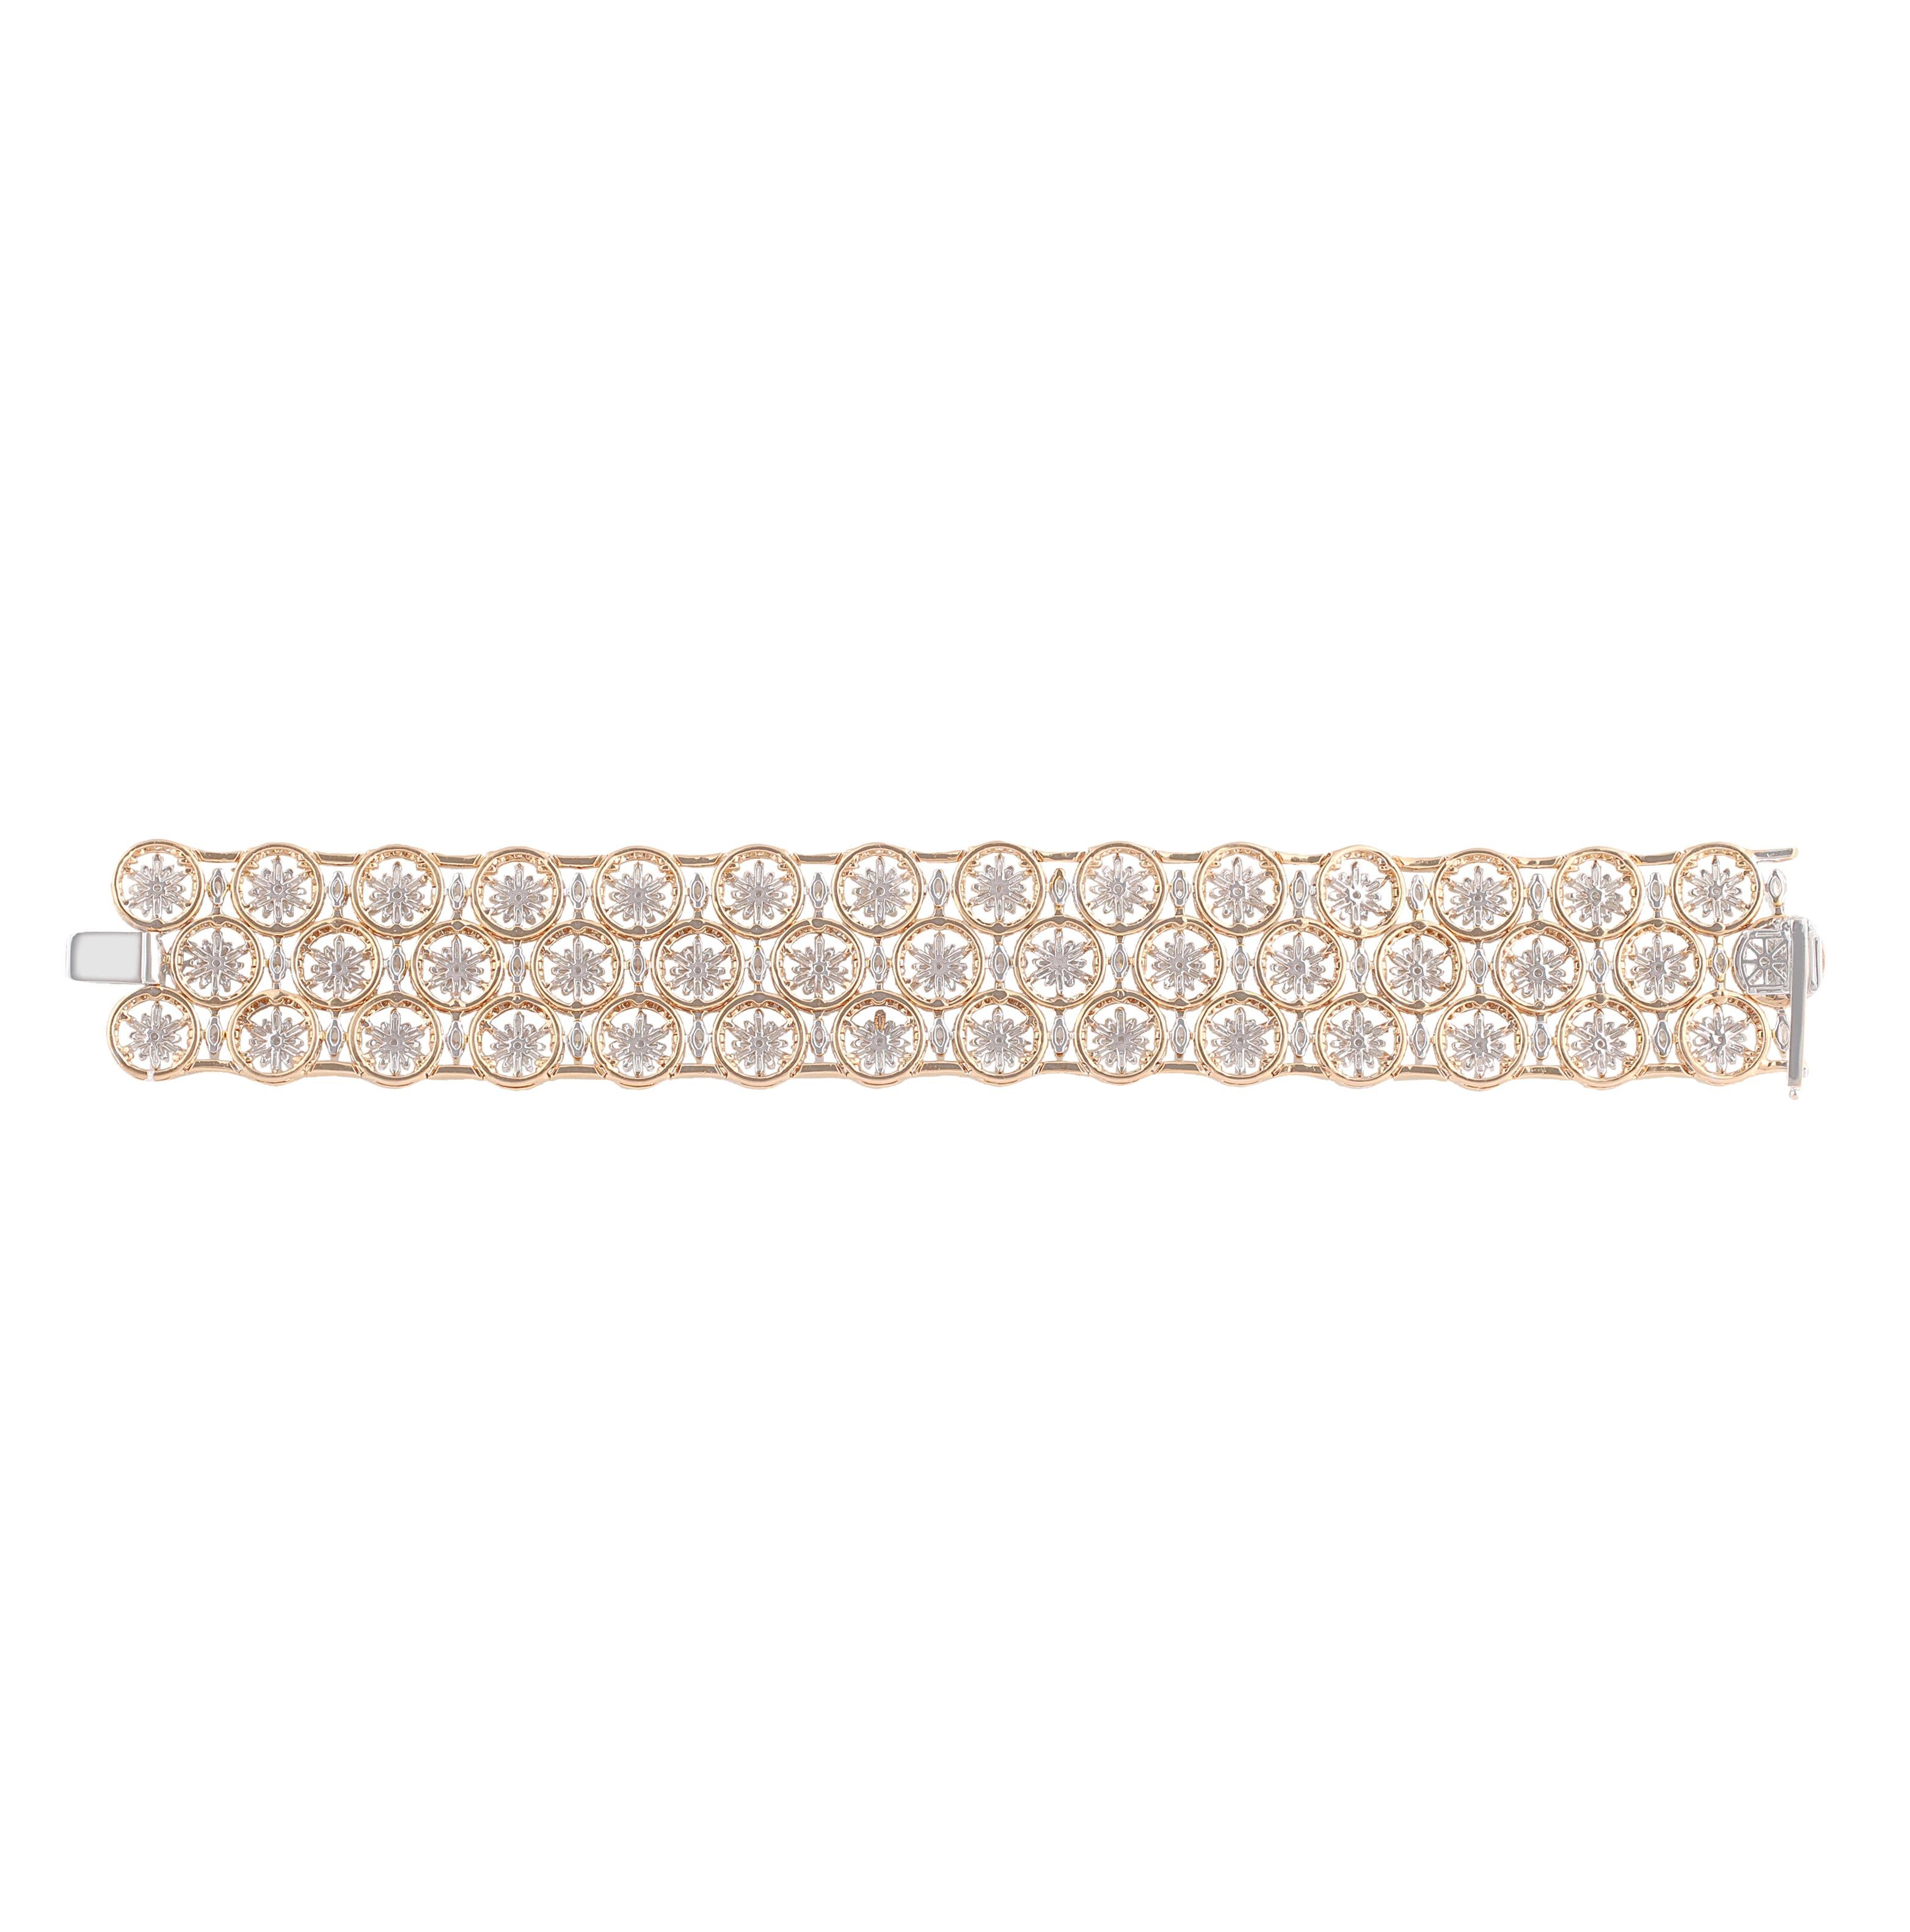 Women's Studio Rêves 15.93 Carat Diamond Studded Floral Bracelet in 18 Karat Gold